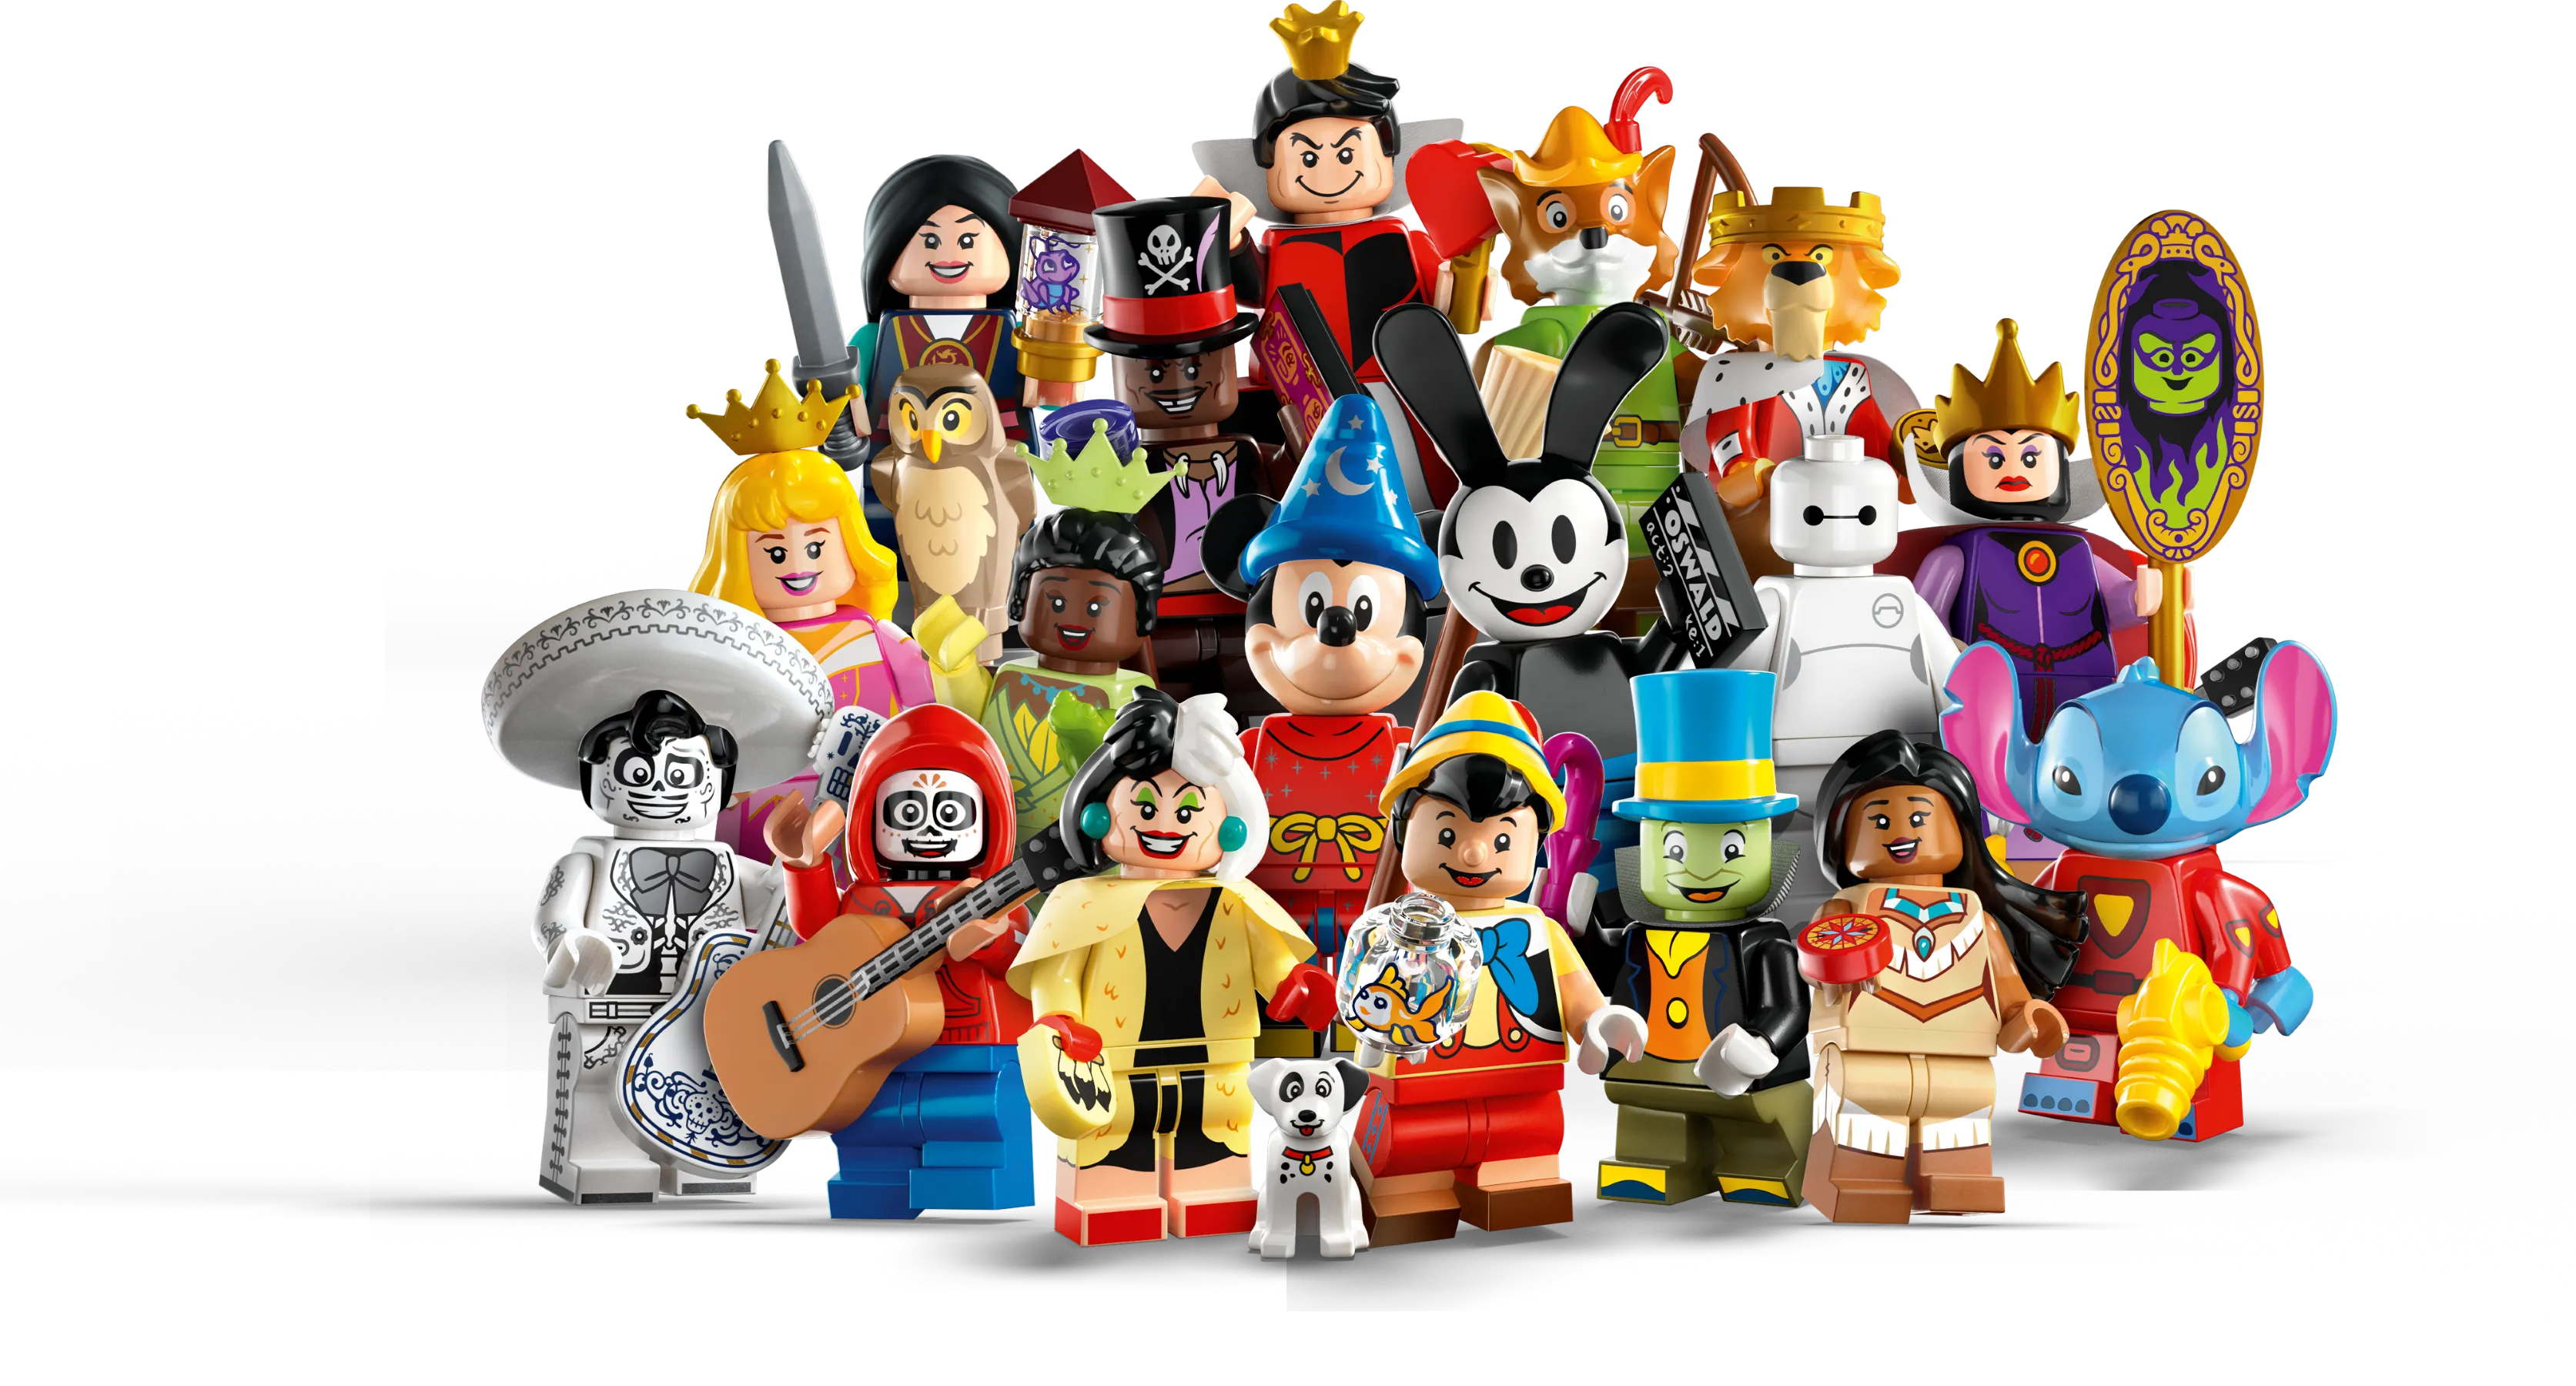 LEGO Stitch 626 Minifigure